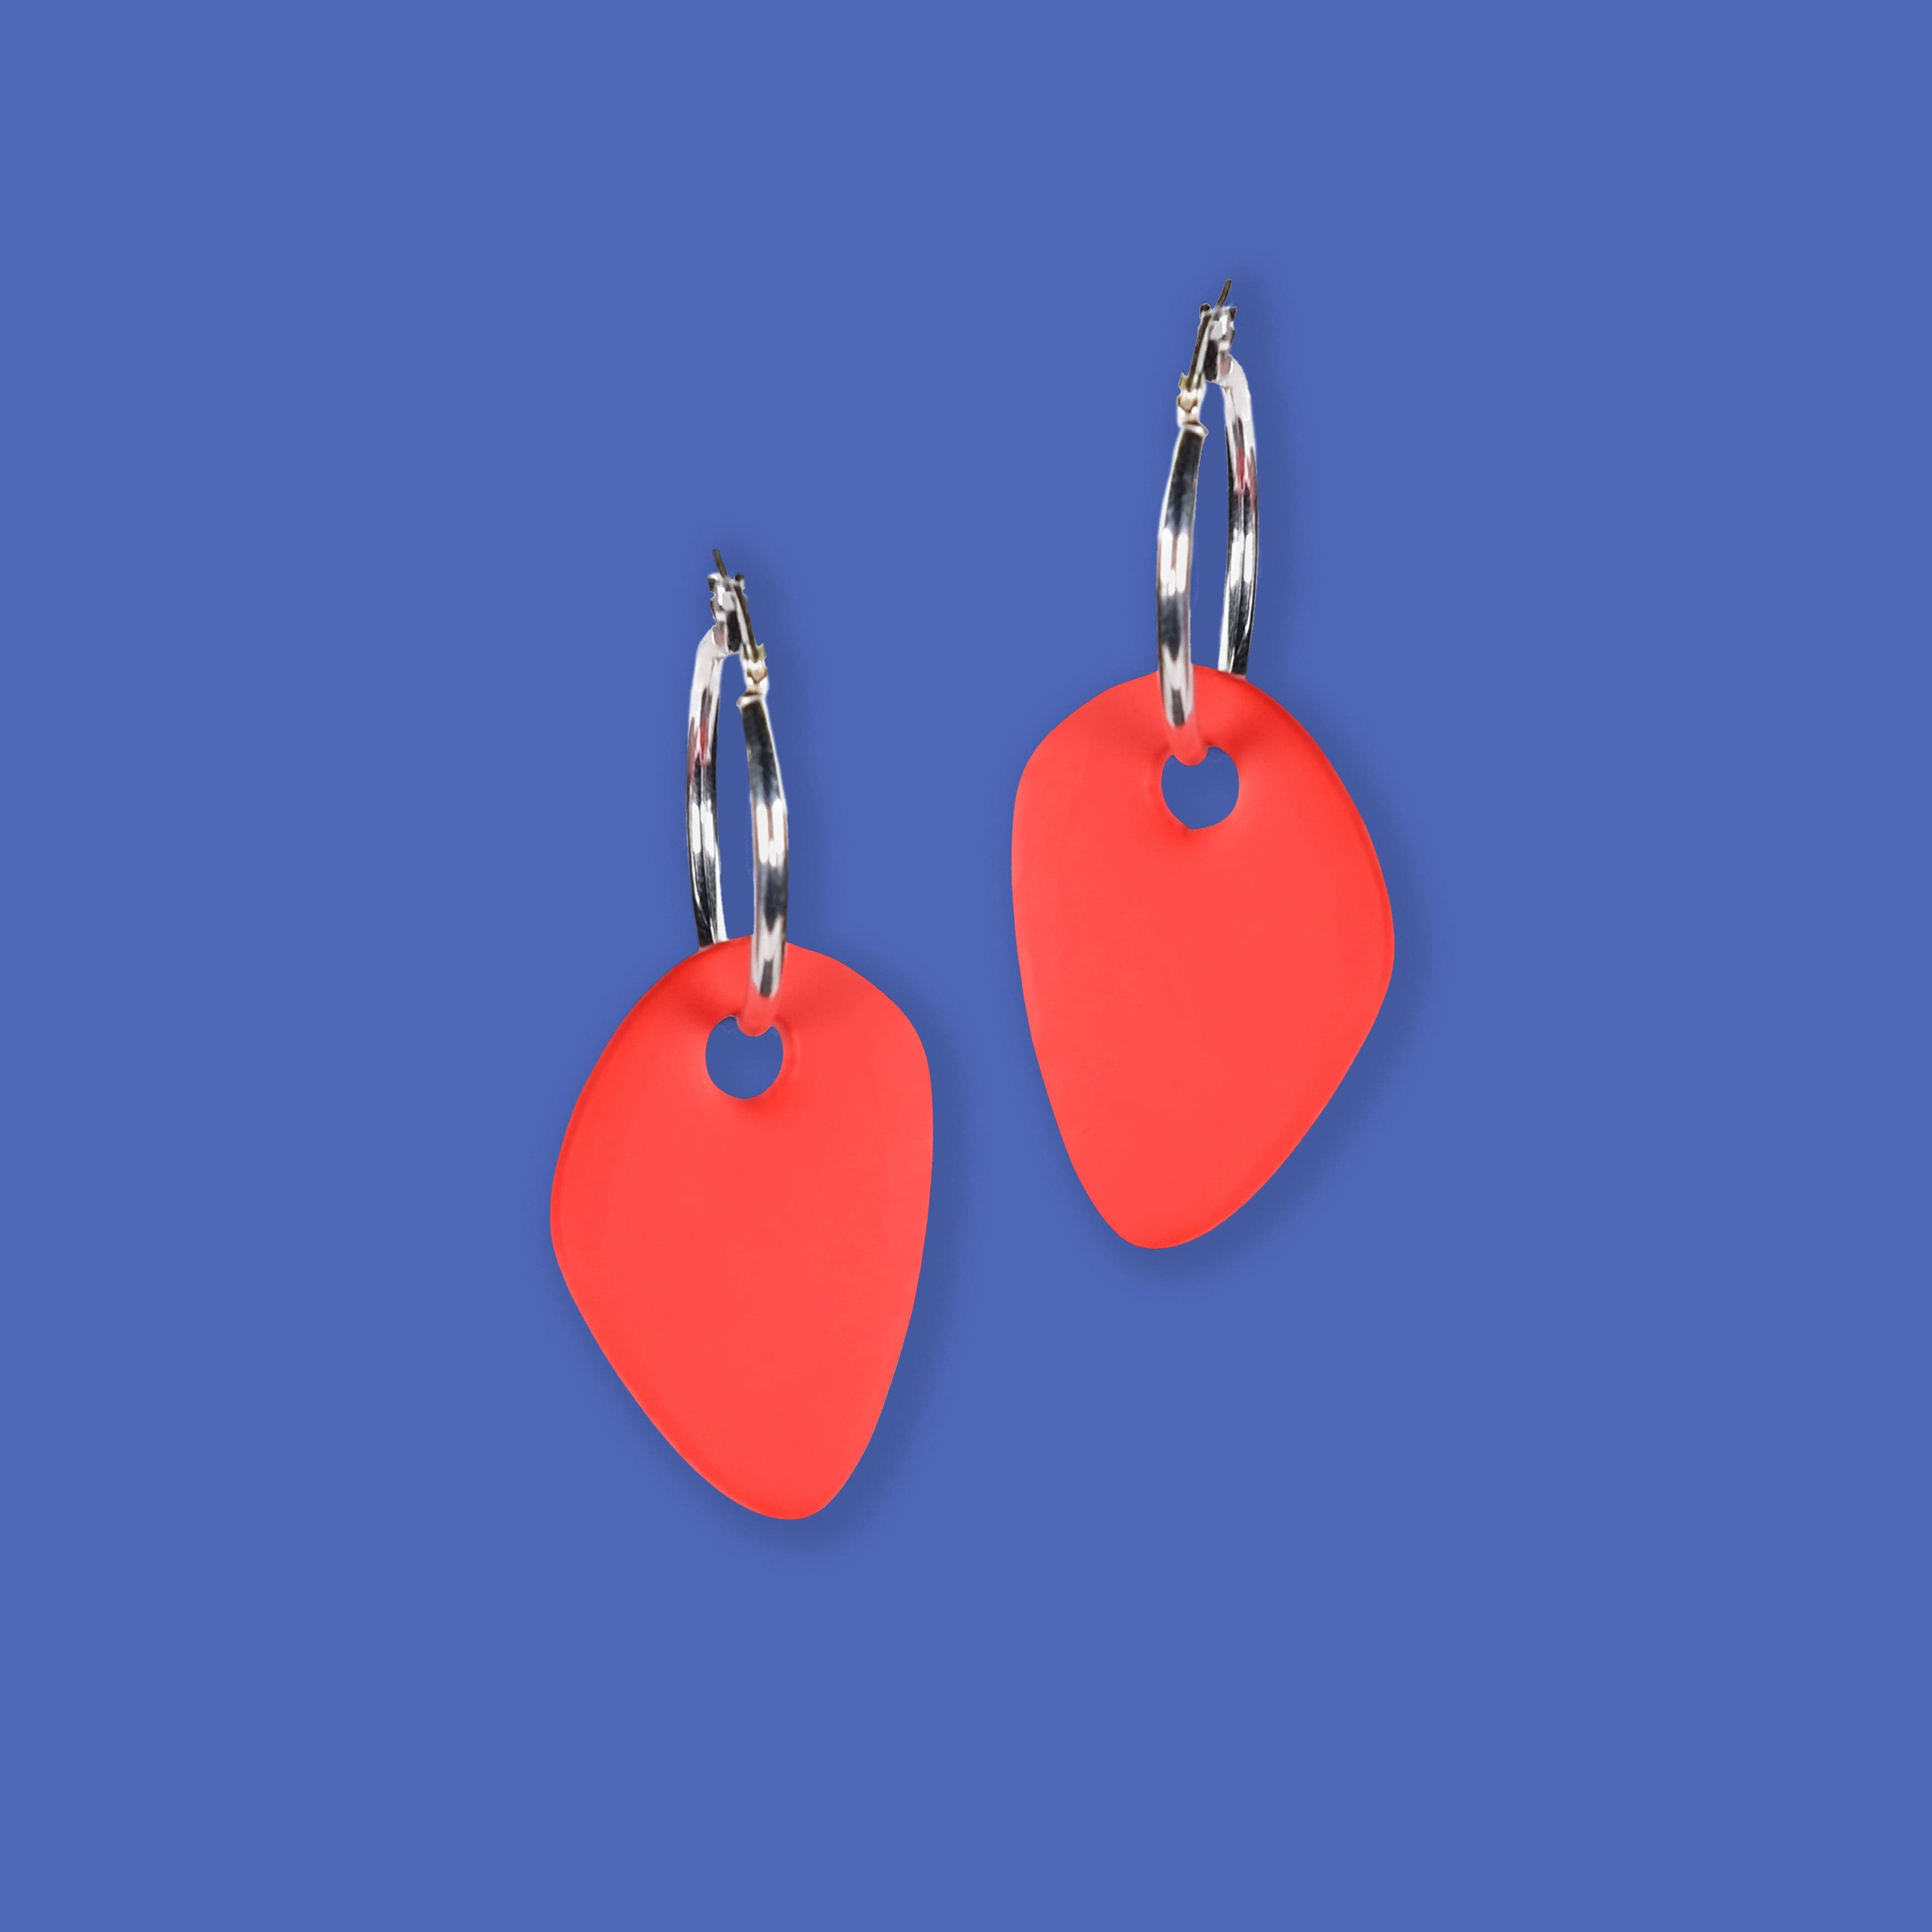 Organic shapes, artistic inspired, lightweight, dangly Calder inspired hoop earrings Calder #color_red